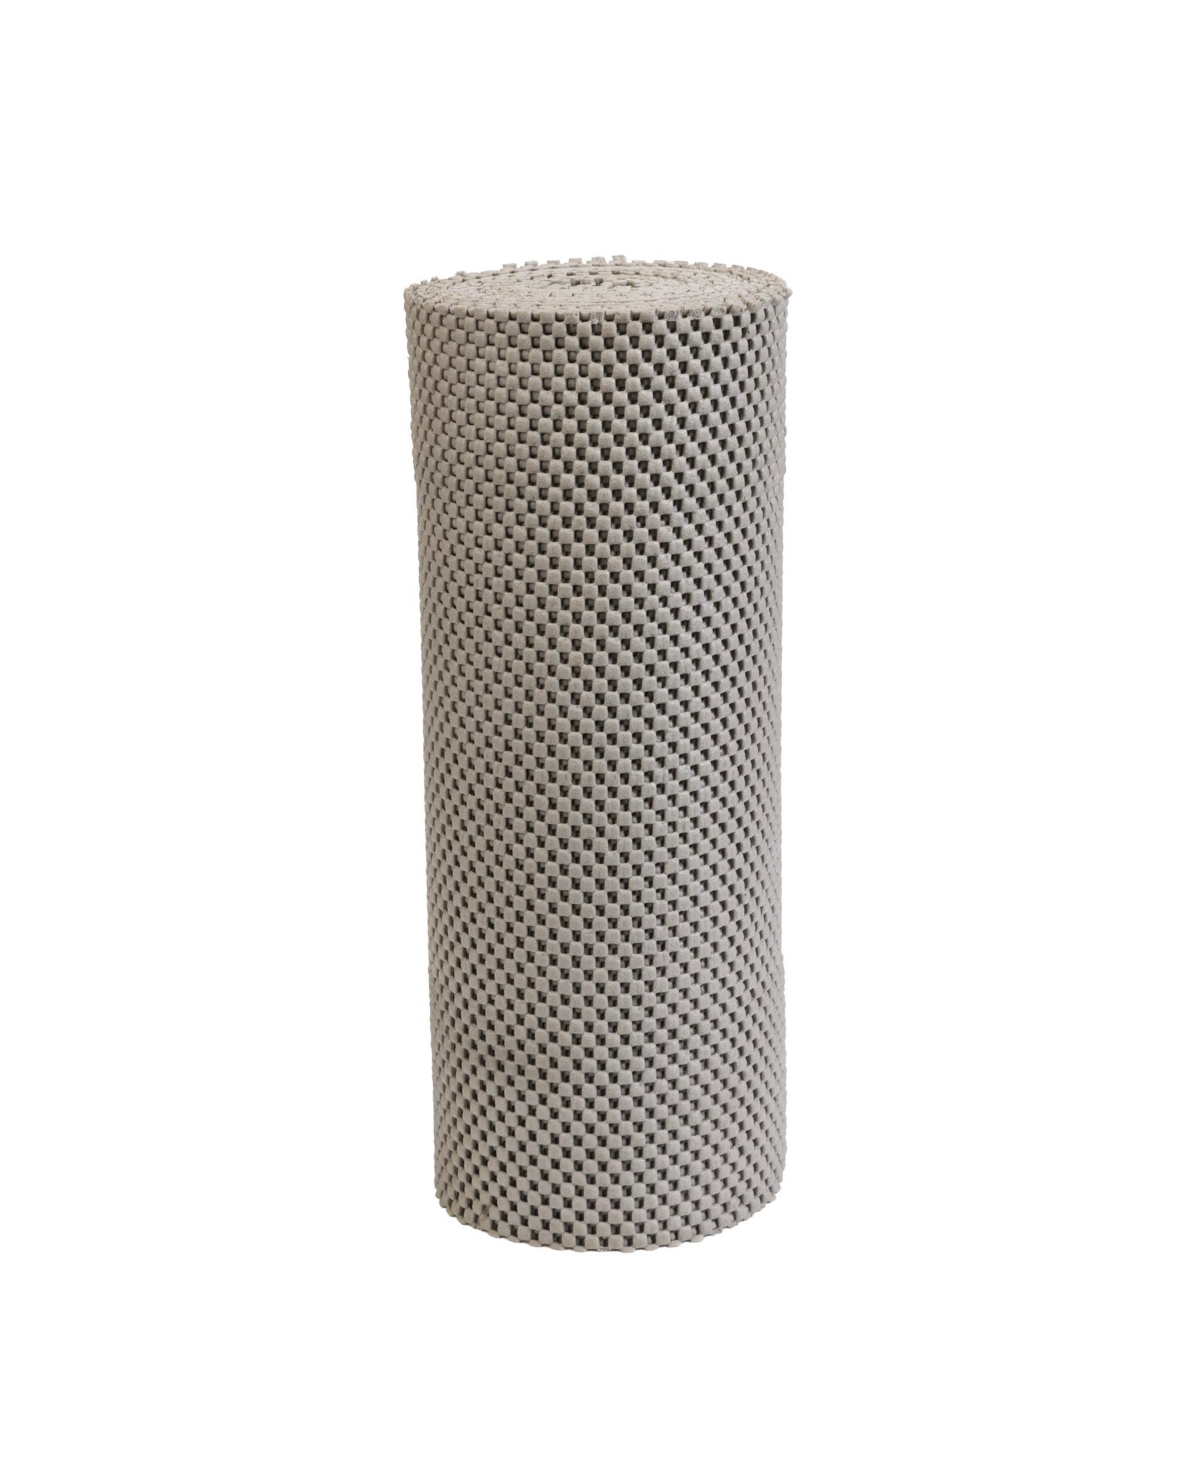 Premium Grip Shelf Liner, 12" x 20' Roll - Cool Gray